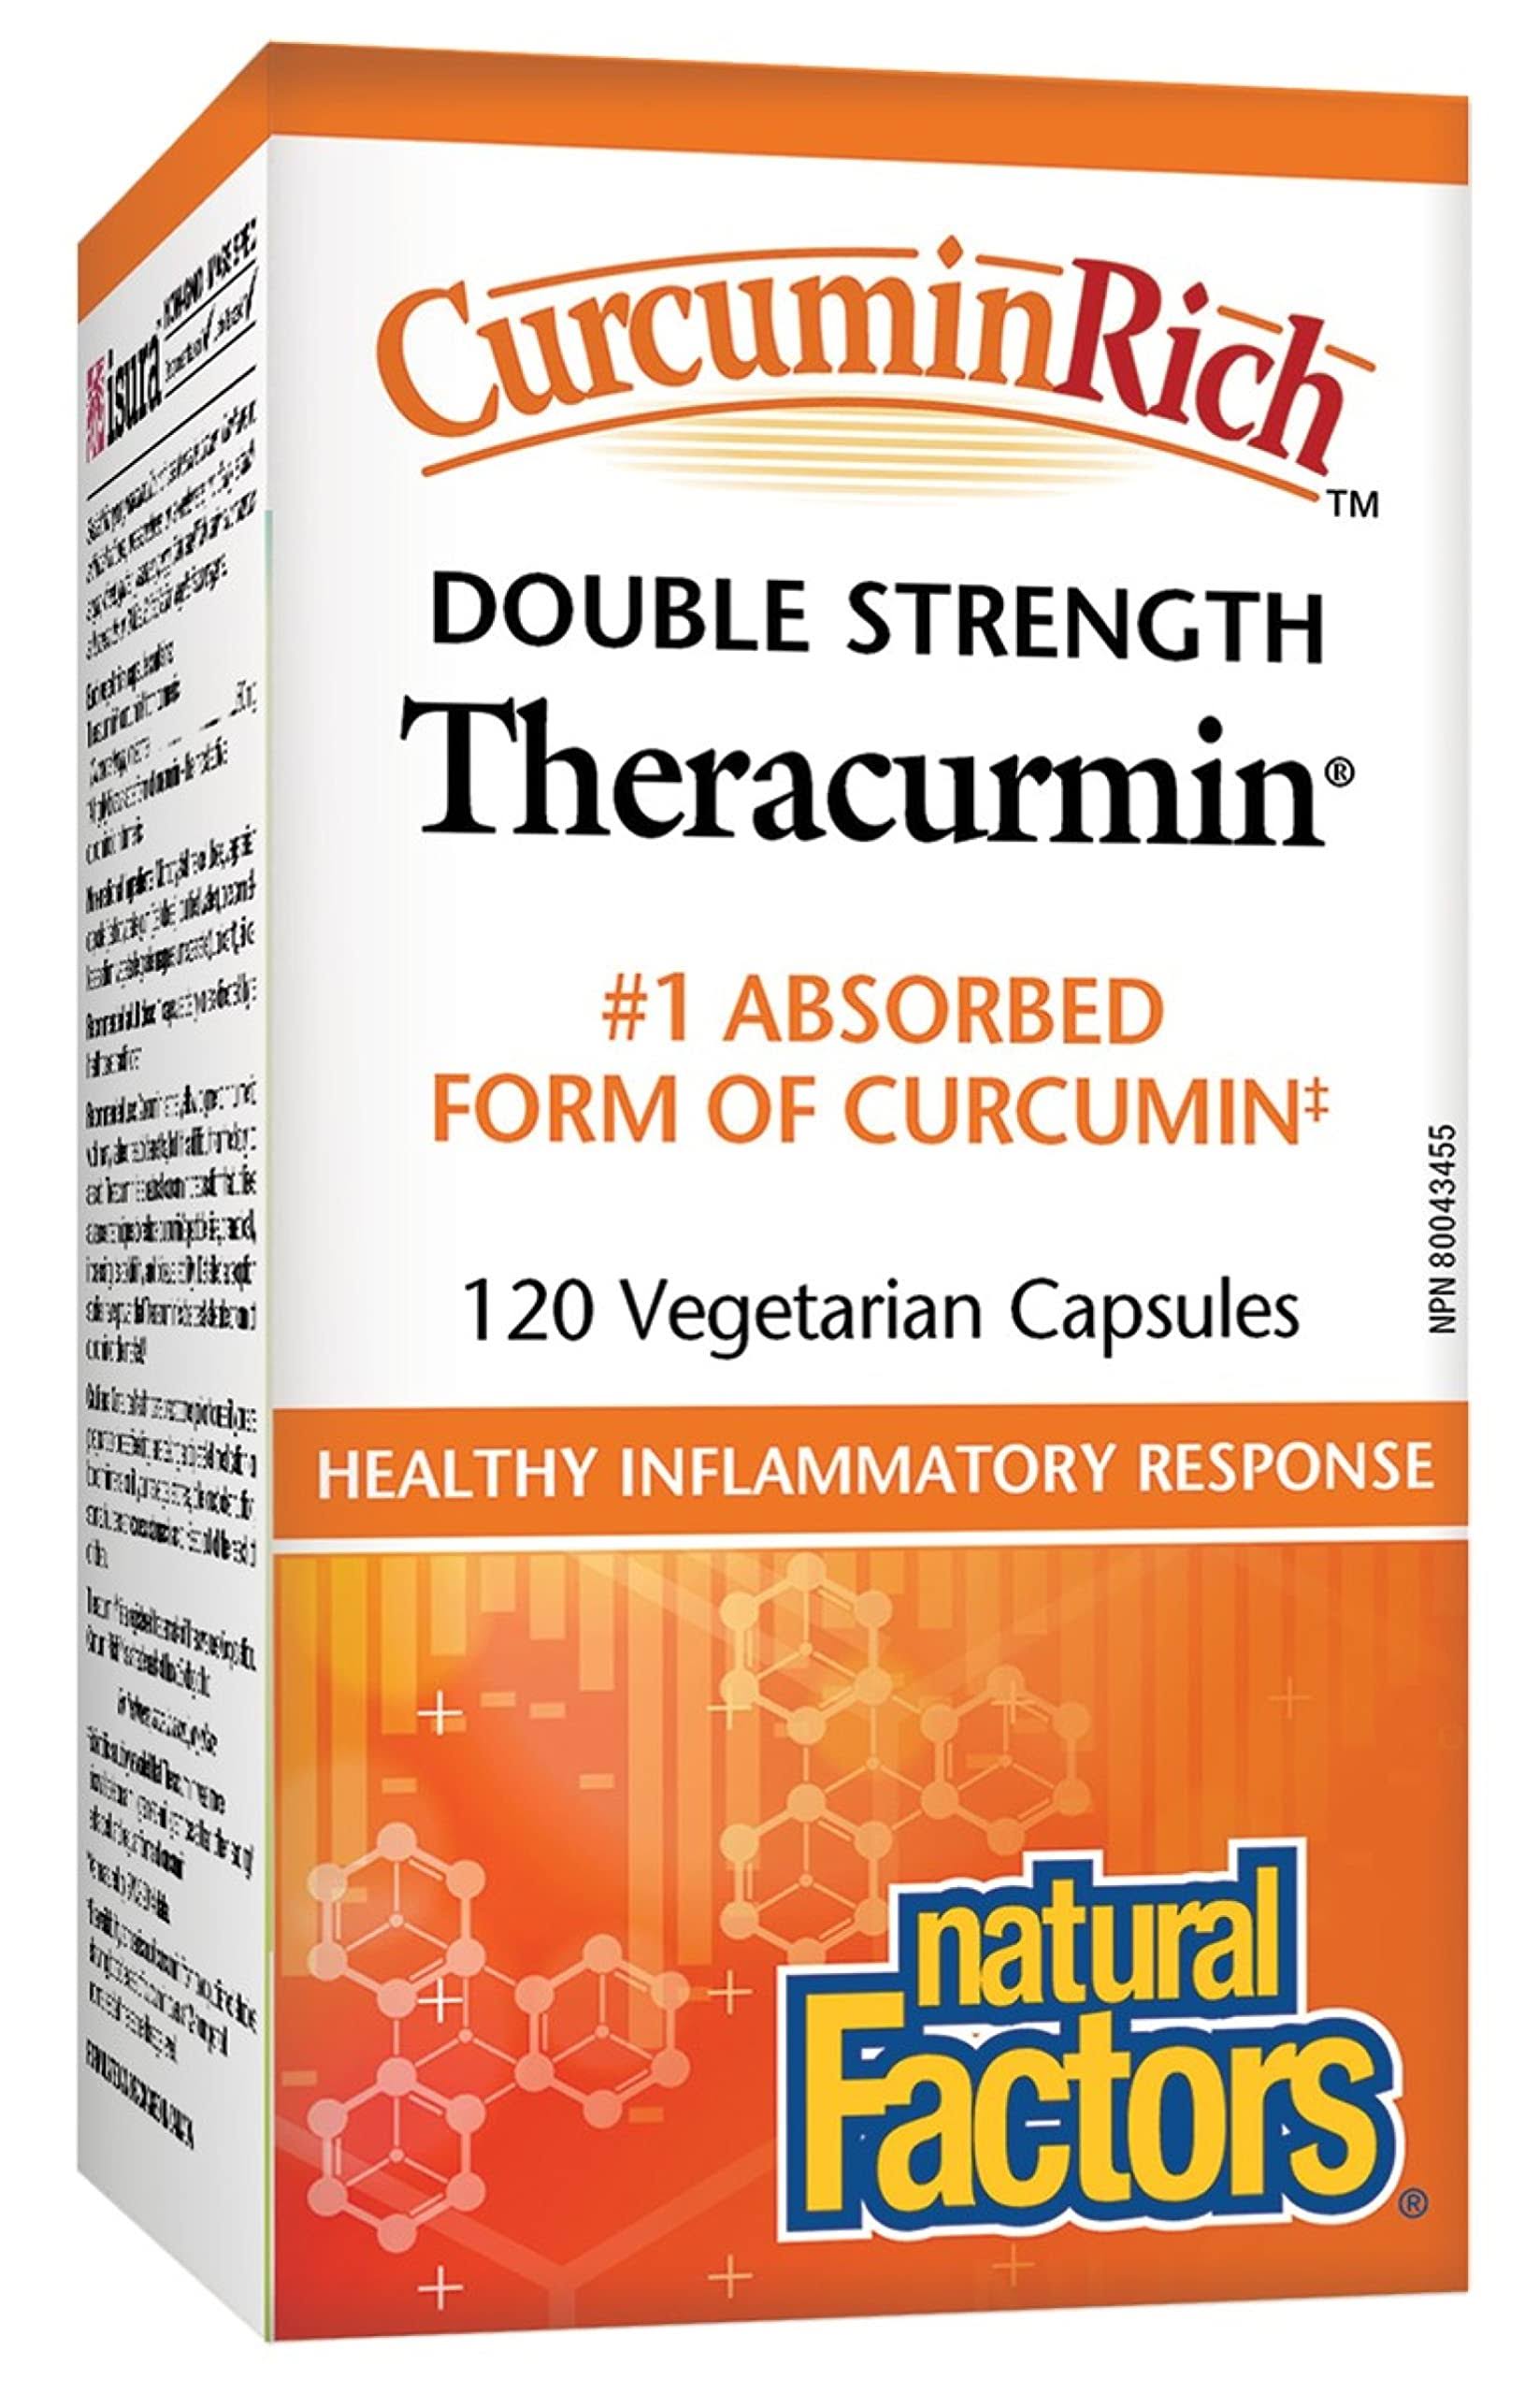 Natural Factors CurcuminRich Double Strength Theracurmin 120 Vegetarian Caps